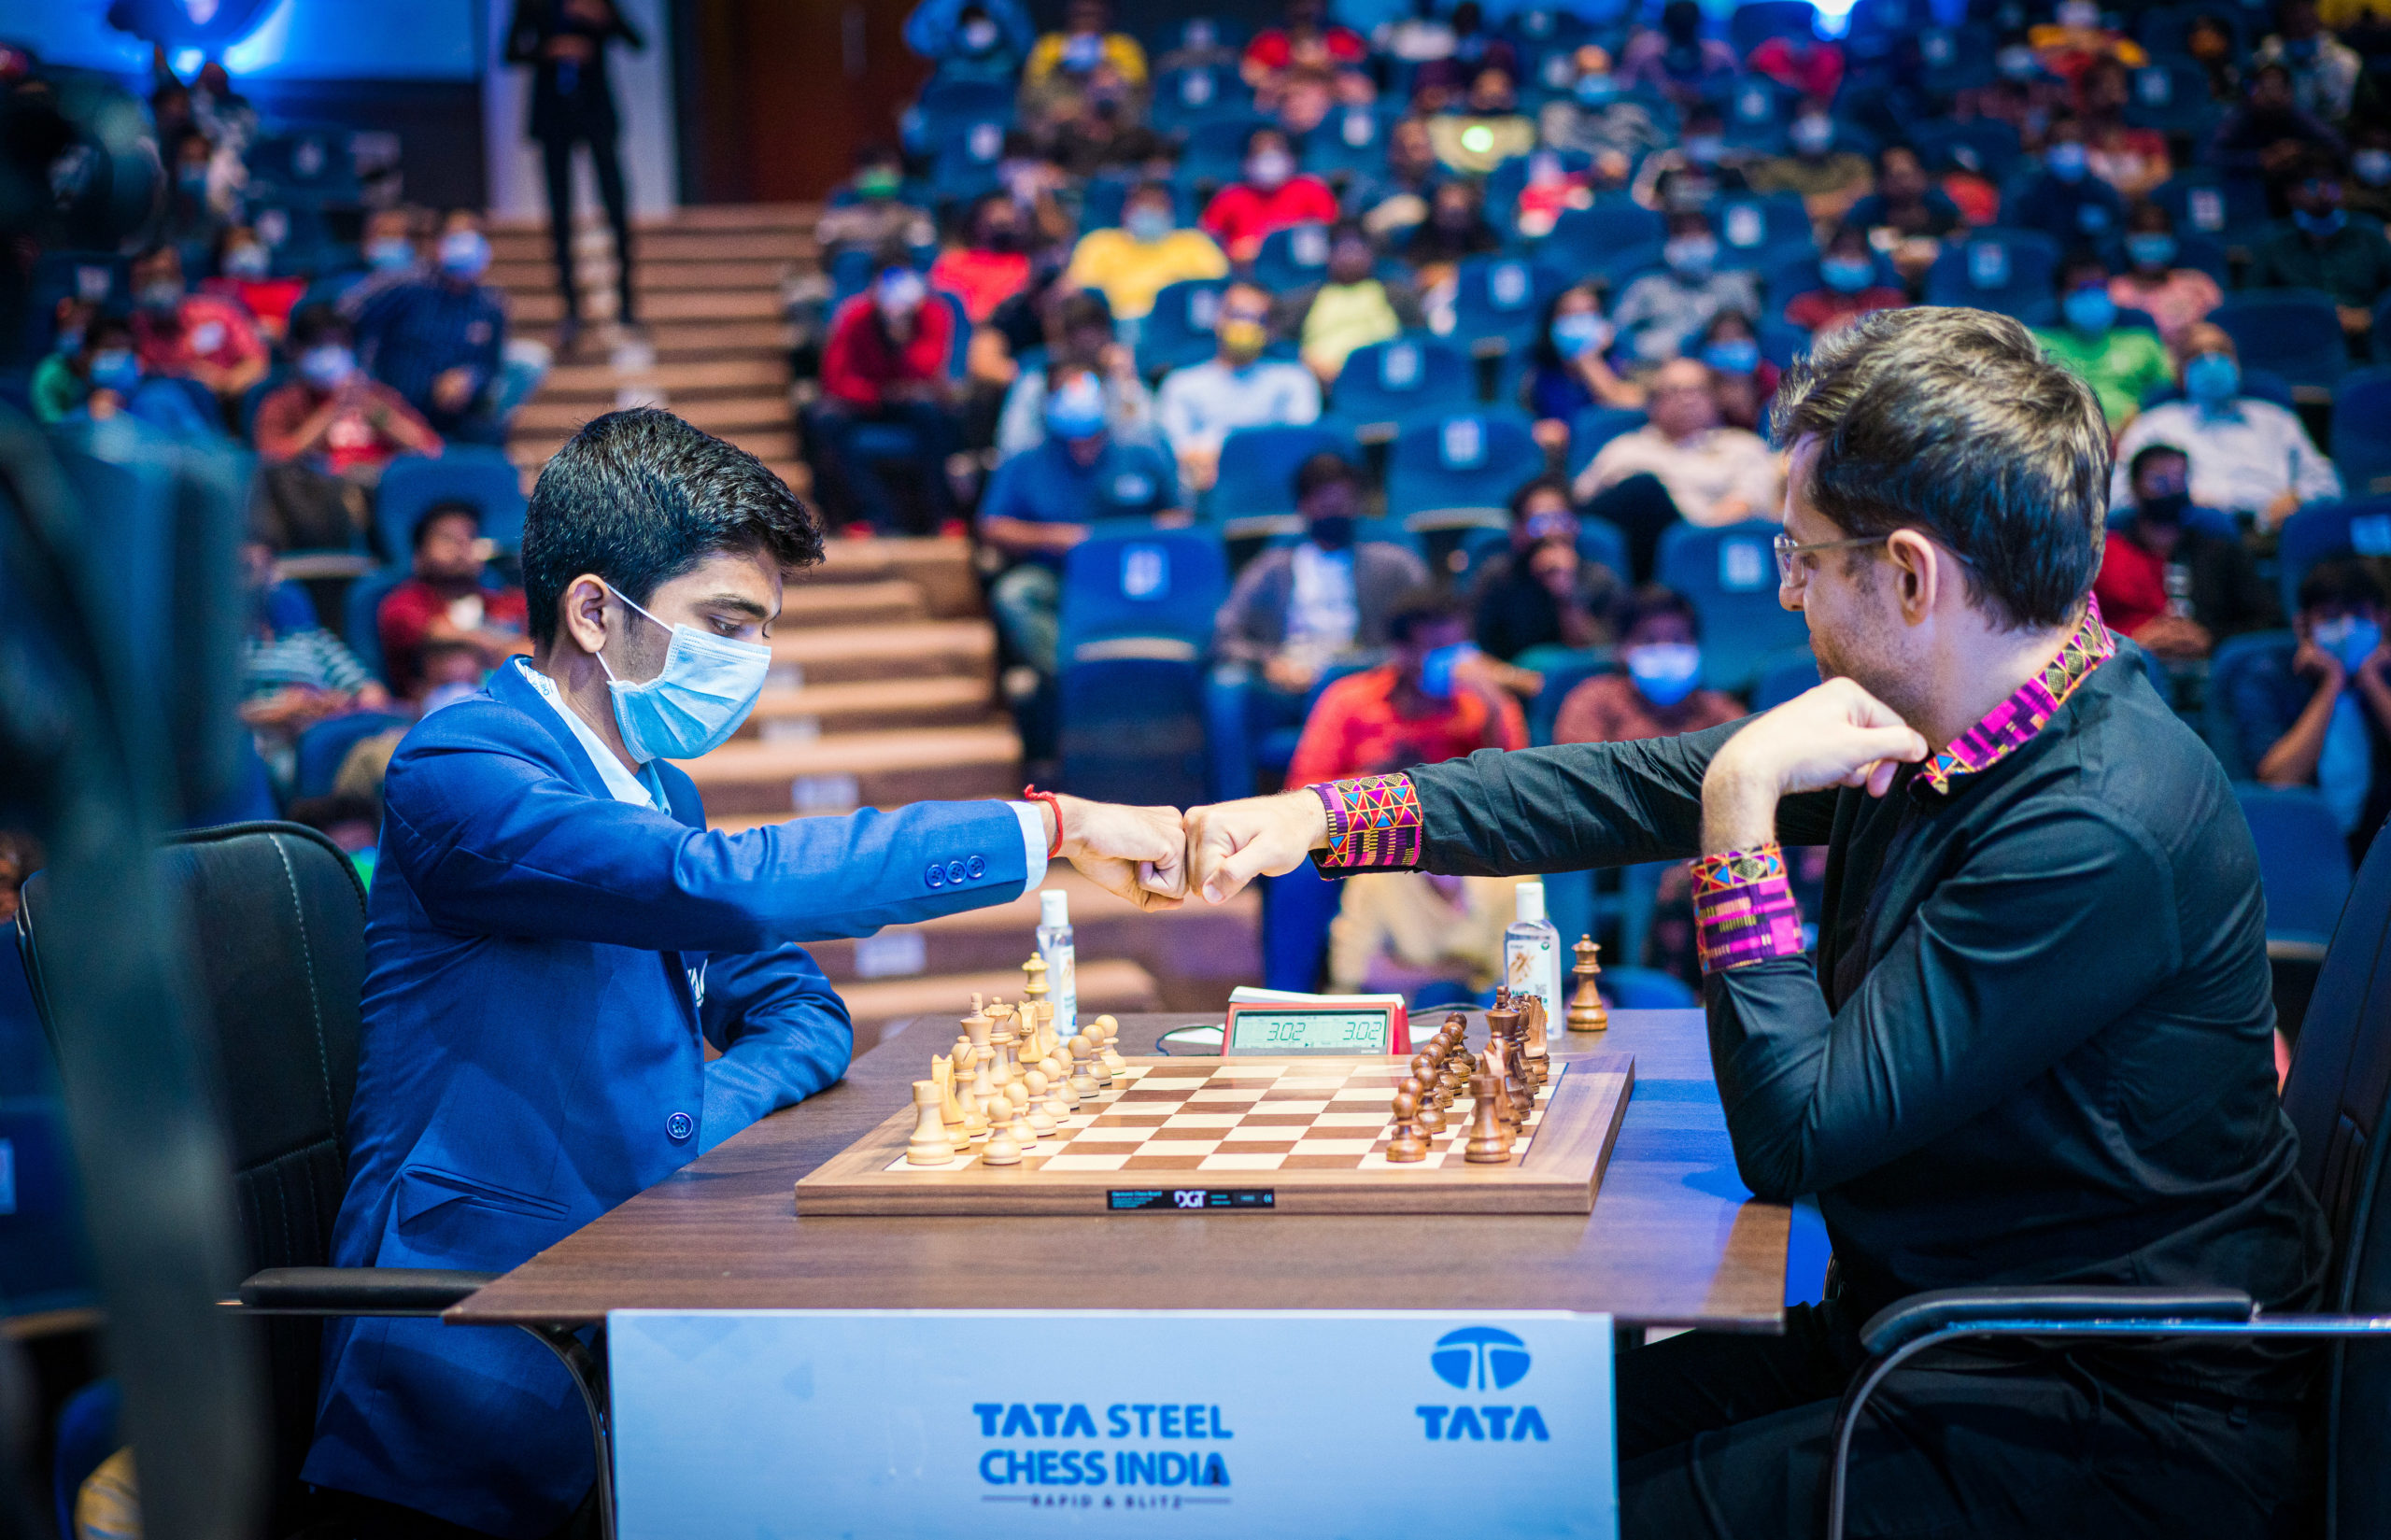 Tata Steel Chess India (@tschessindia) / X